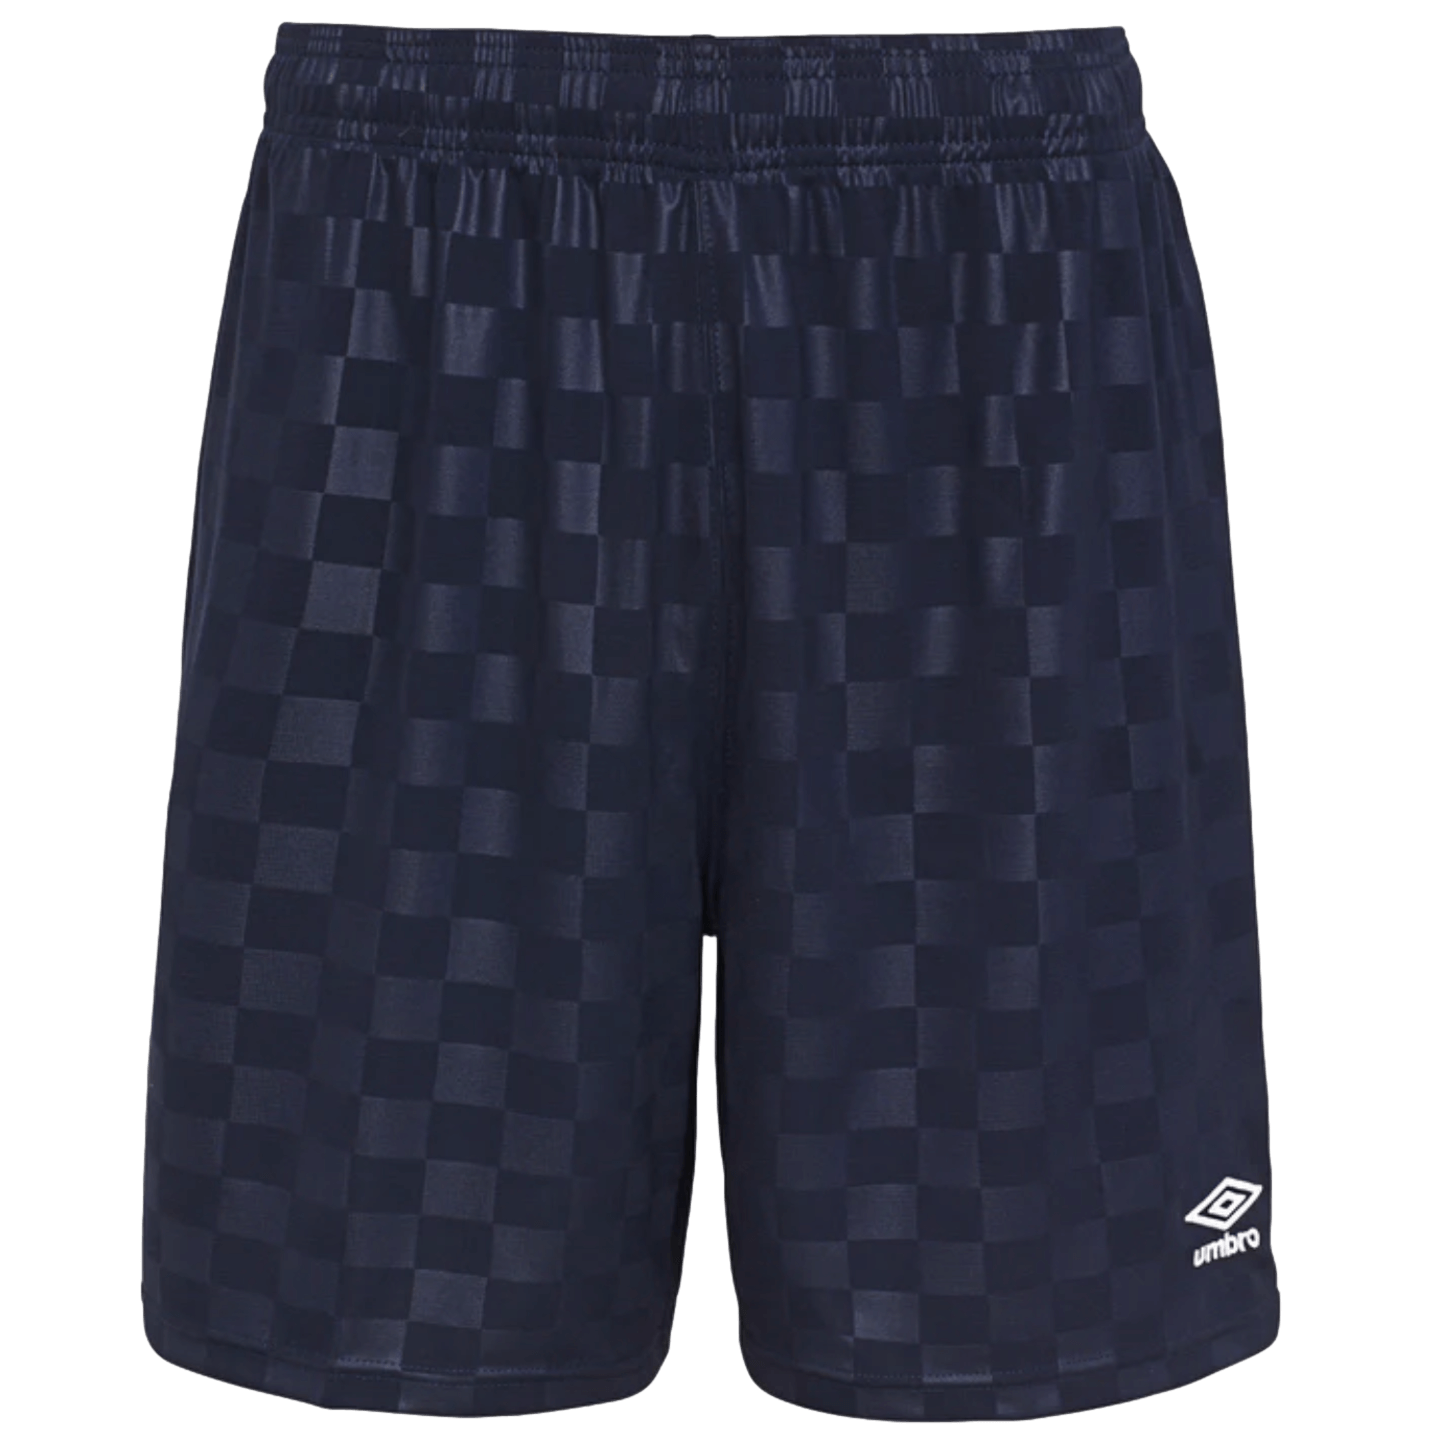 Umbro Checkerboard Shorts